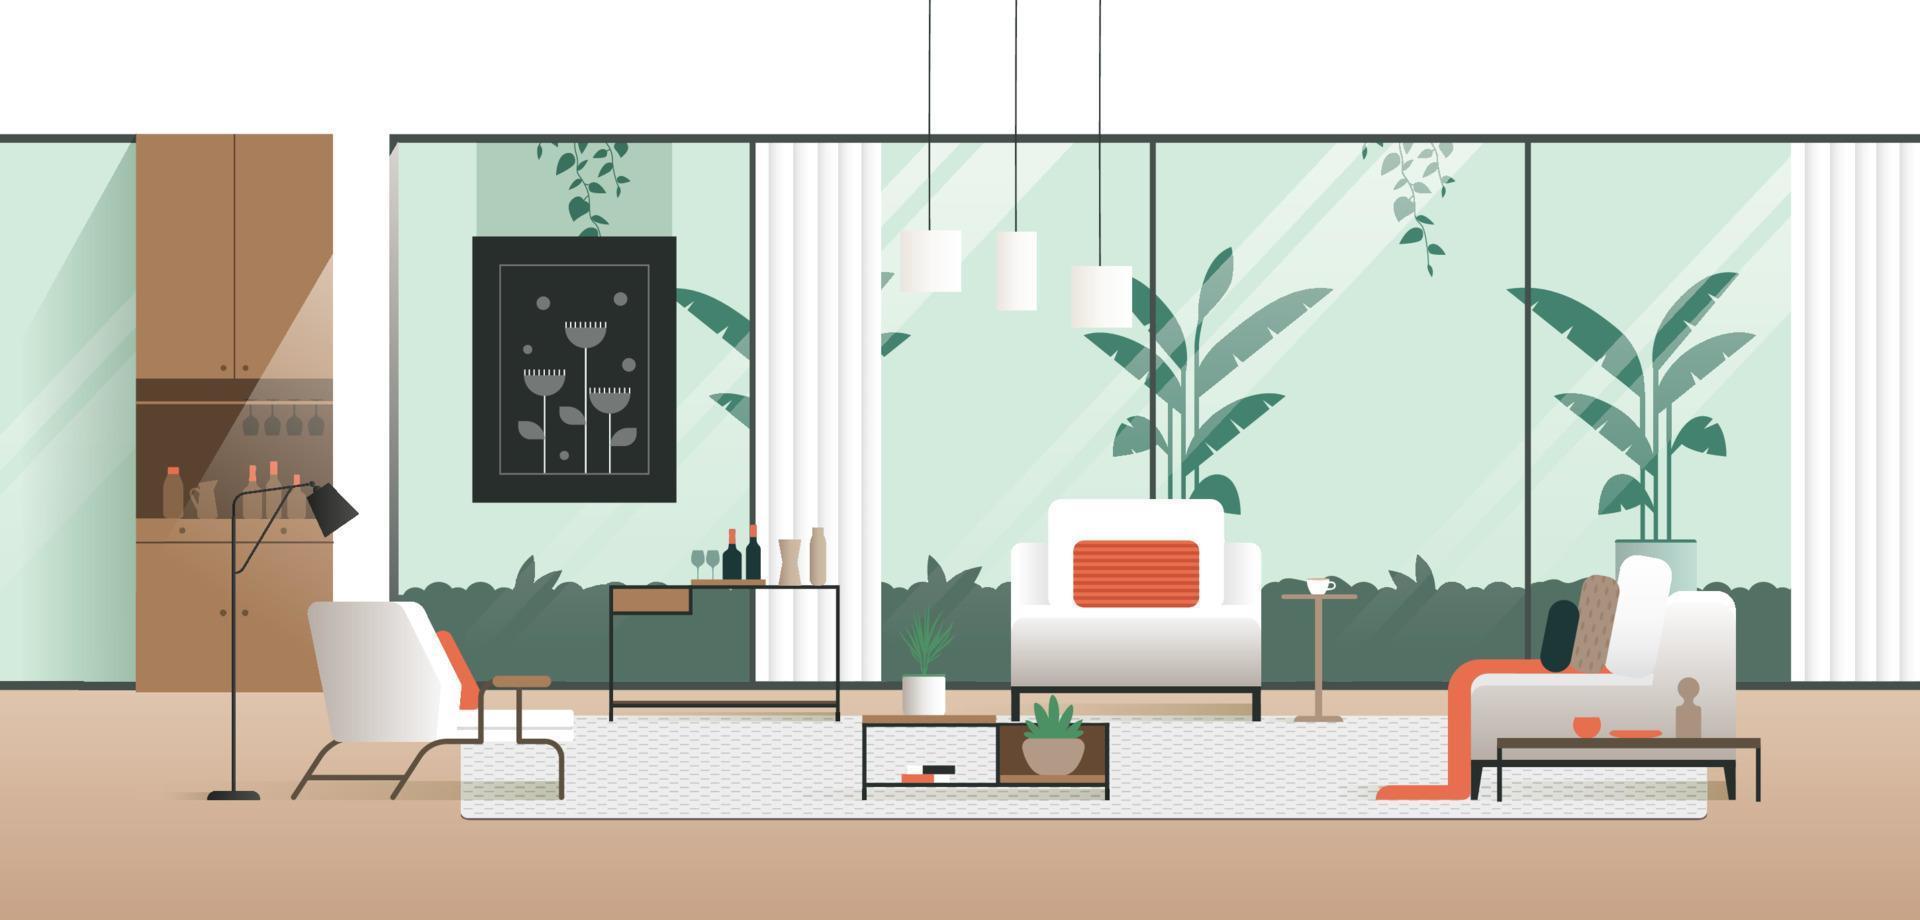 espacioso moderno vivo habitación interior con grande ventanas hogar interior en plano diseño vector